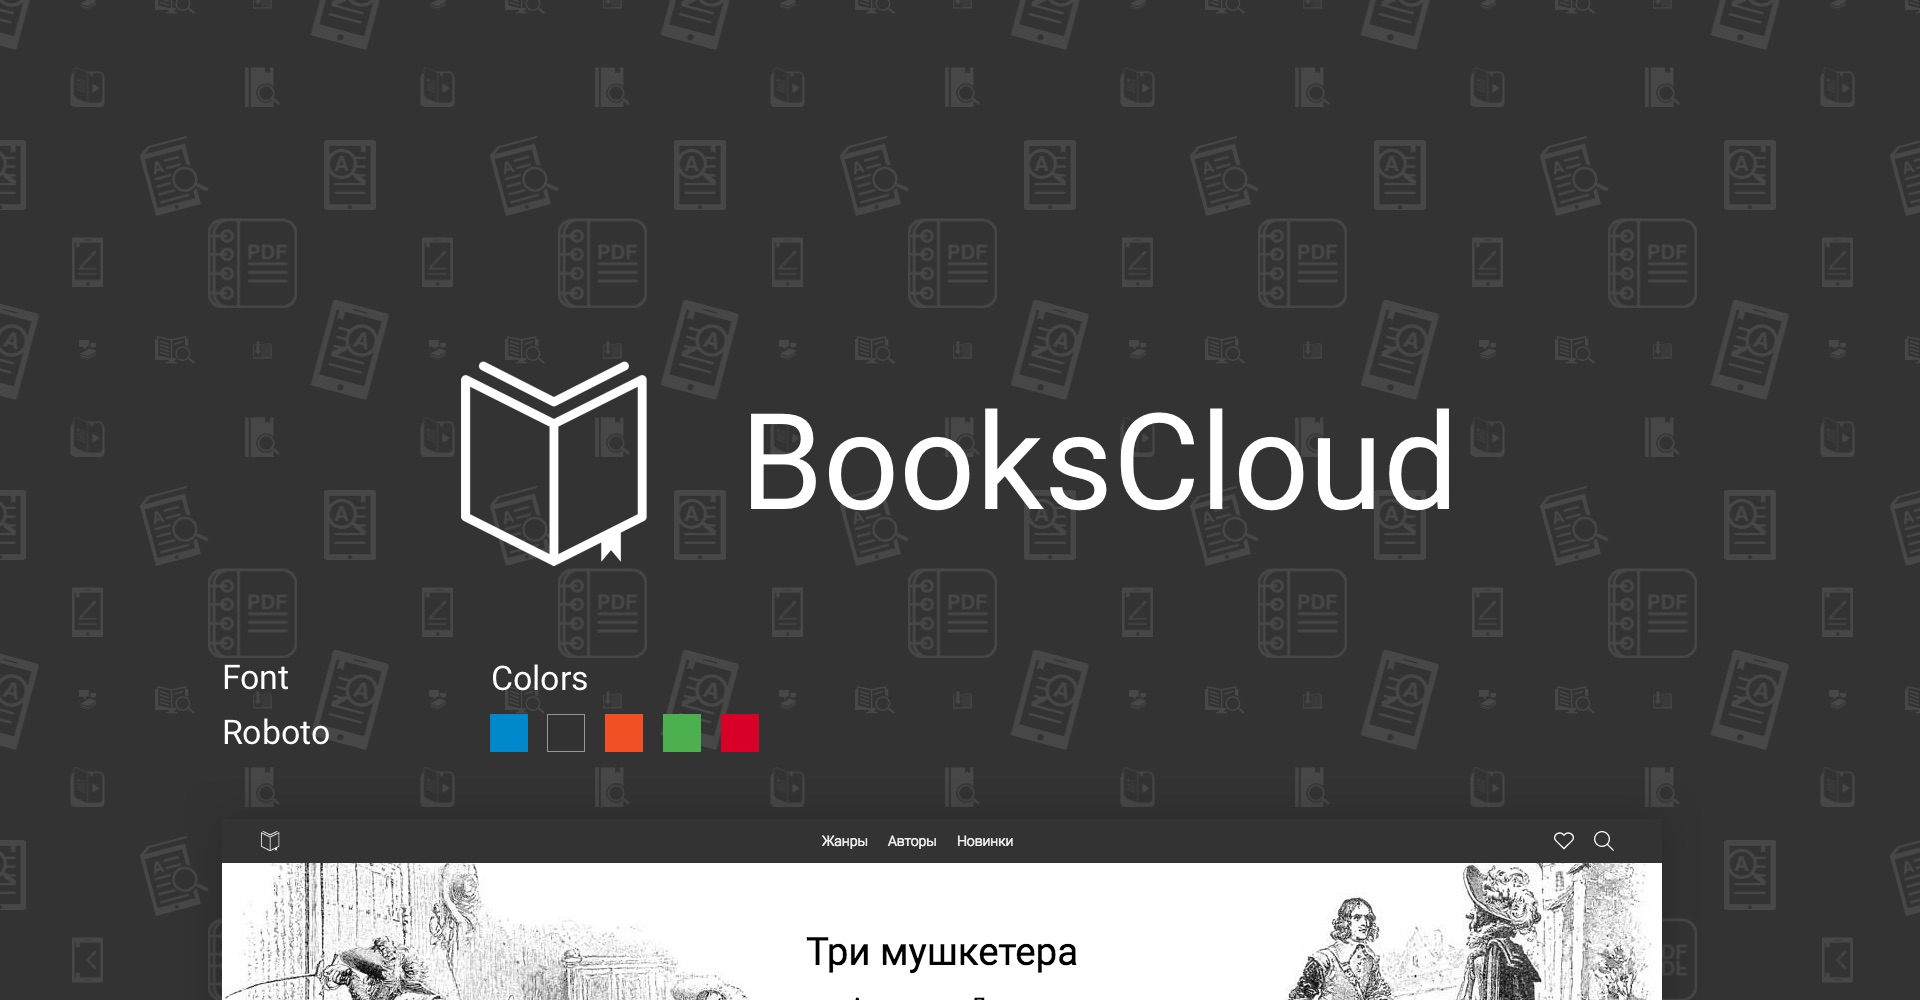 Bookscloud